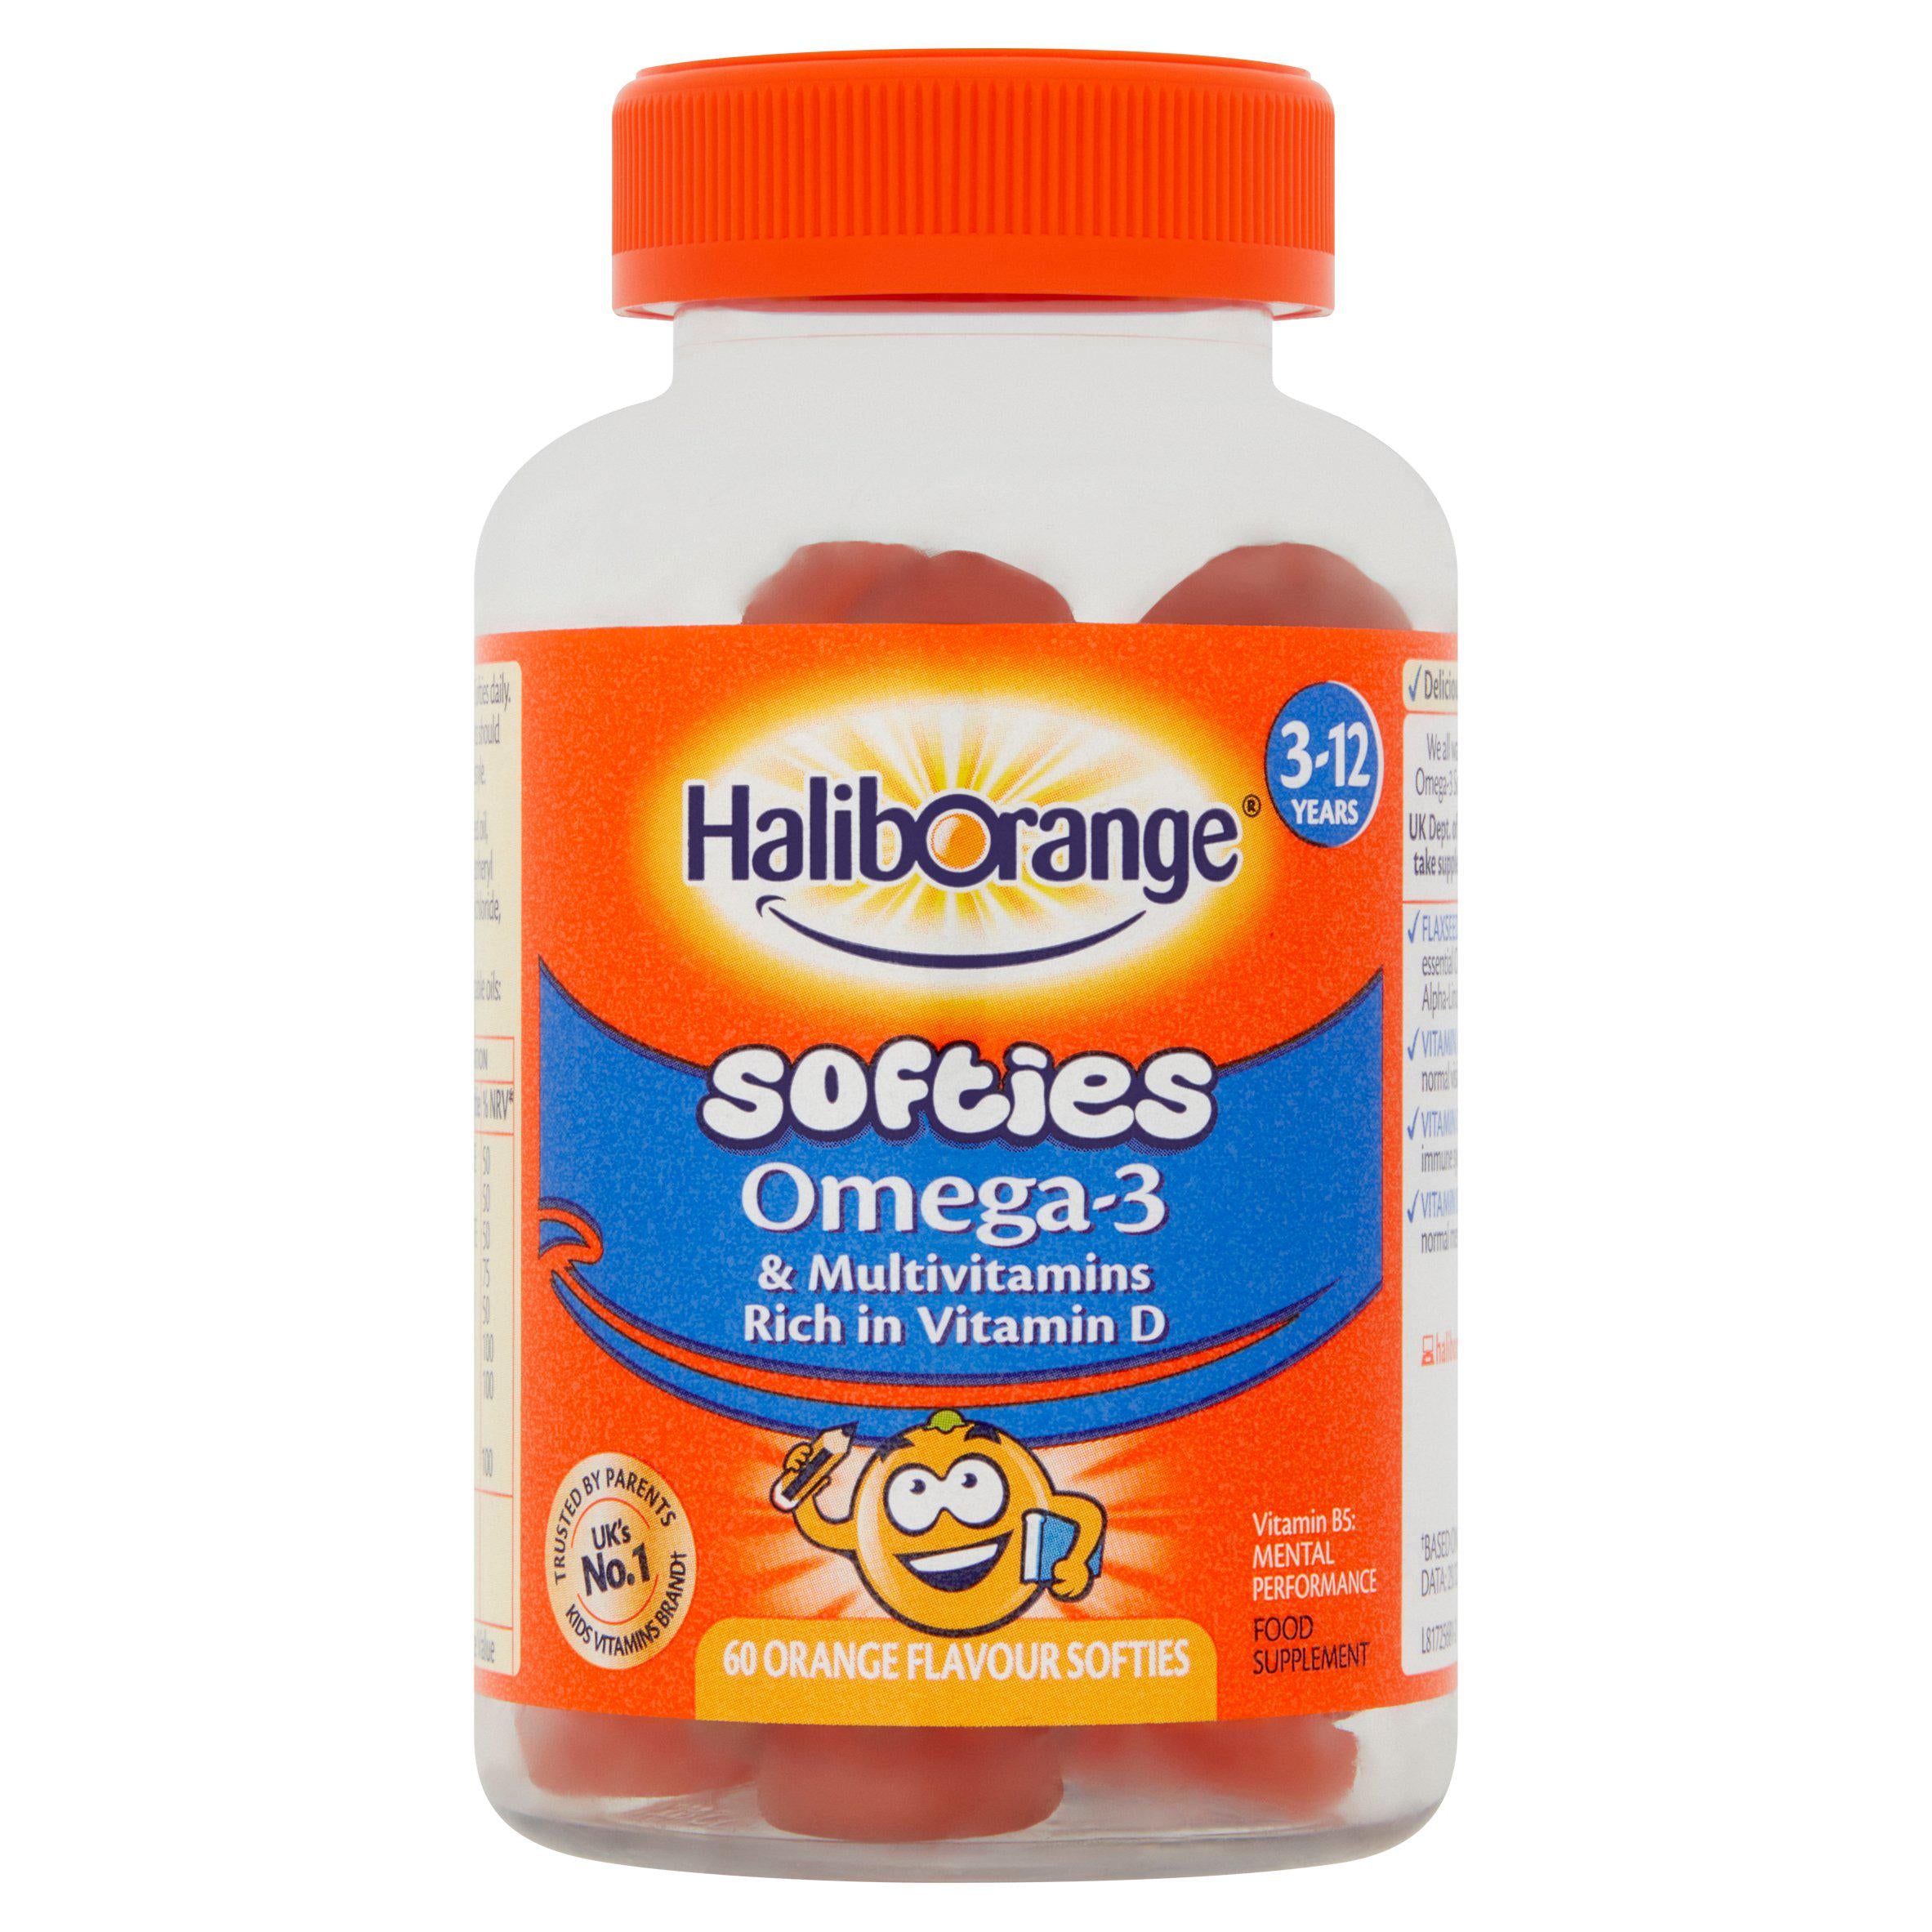 Haliborange Omega 3 & Multivitamins Orange Flavoured Softies, 3-12 Years x60 baby & children's healthcare Sainsburys   